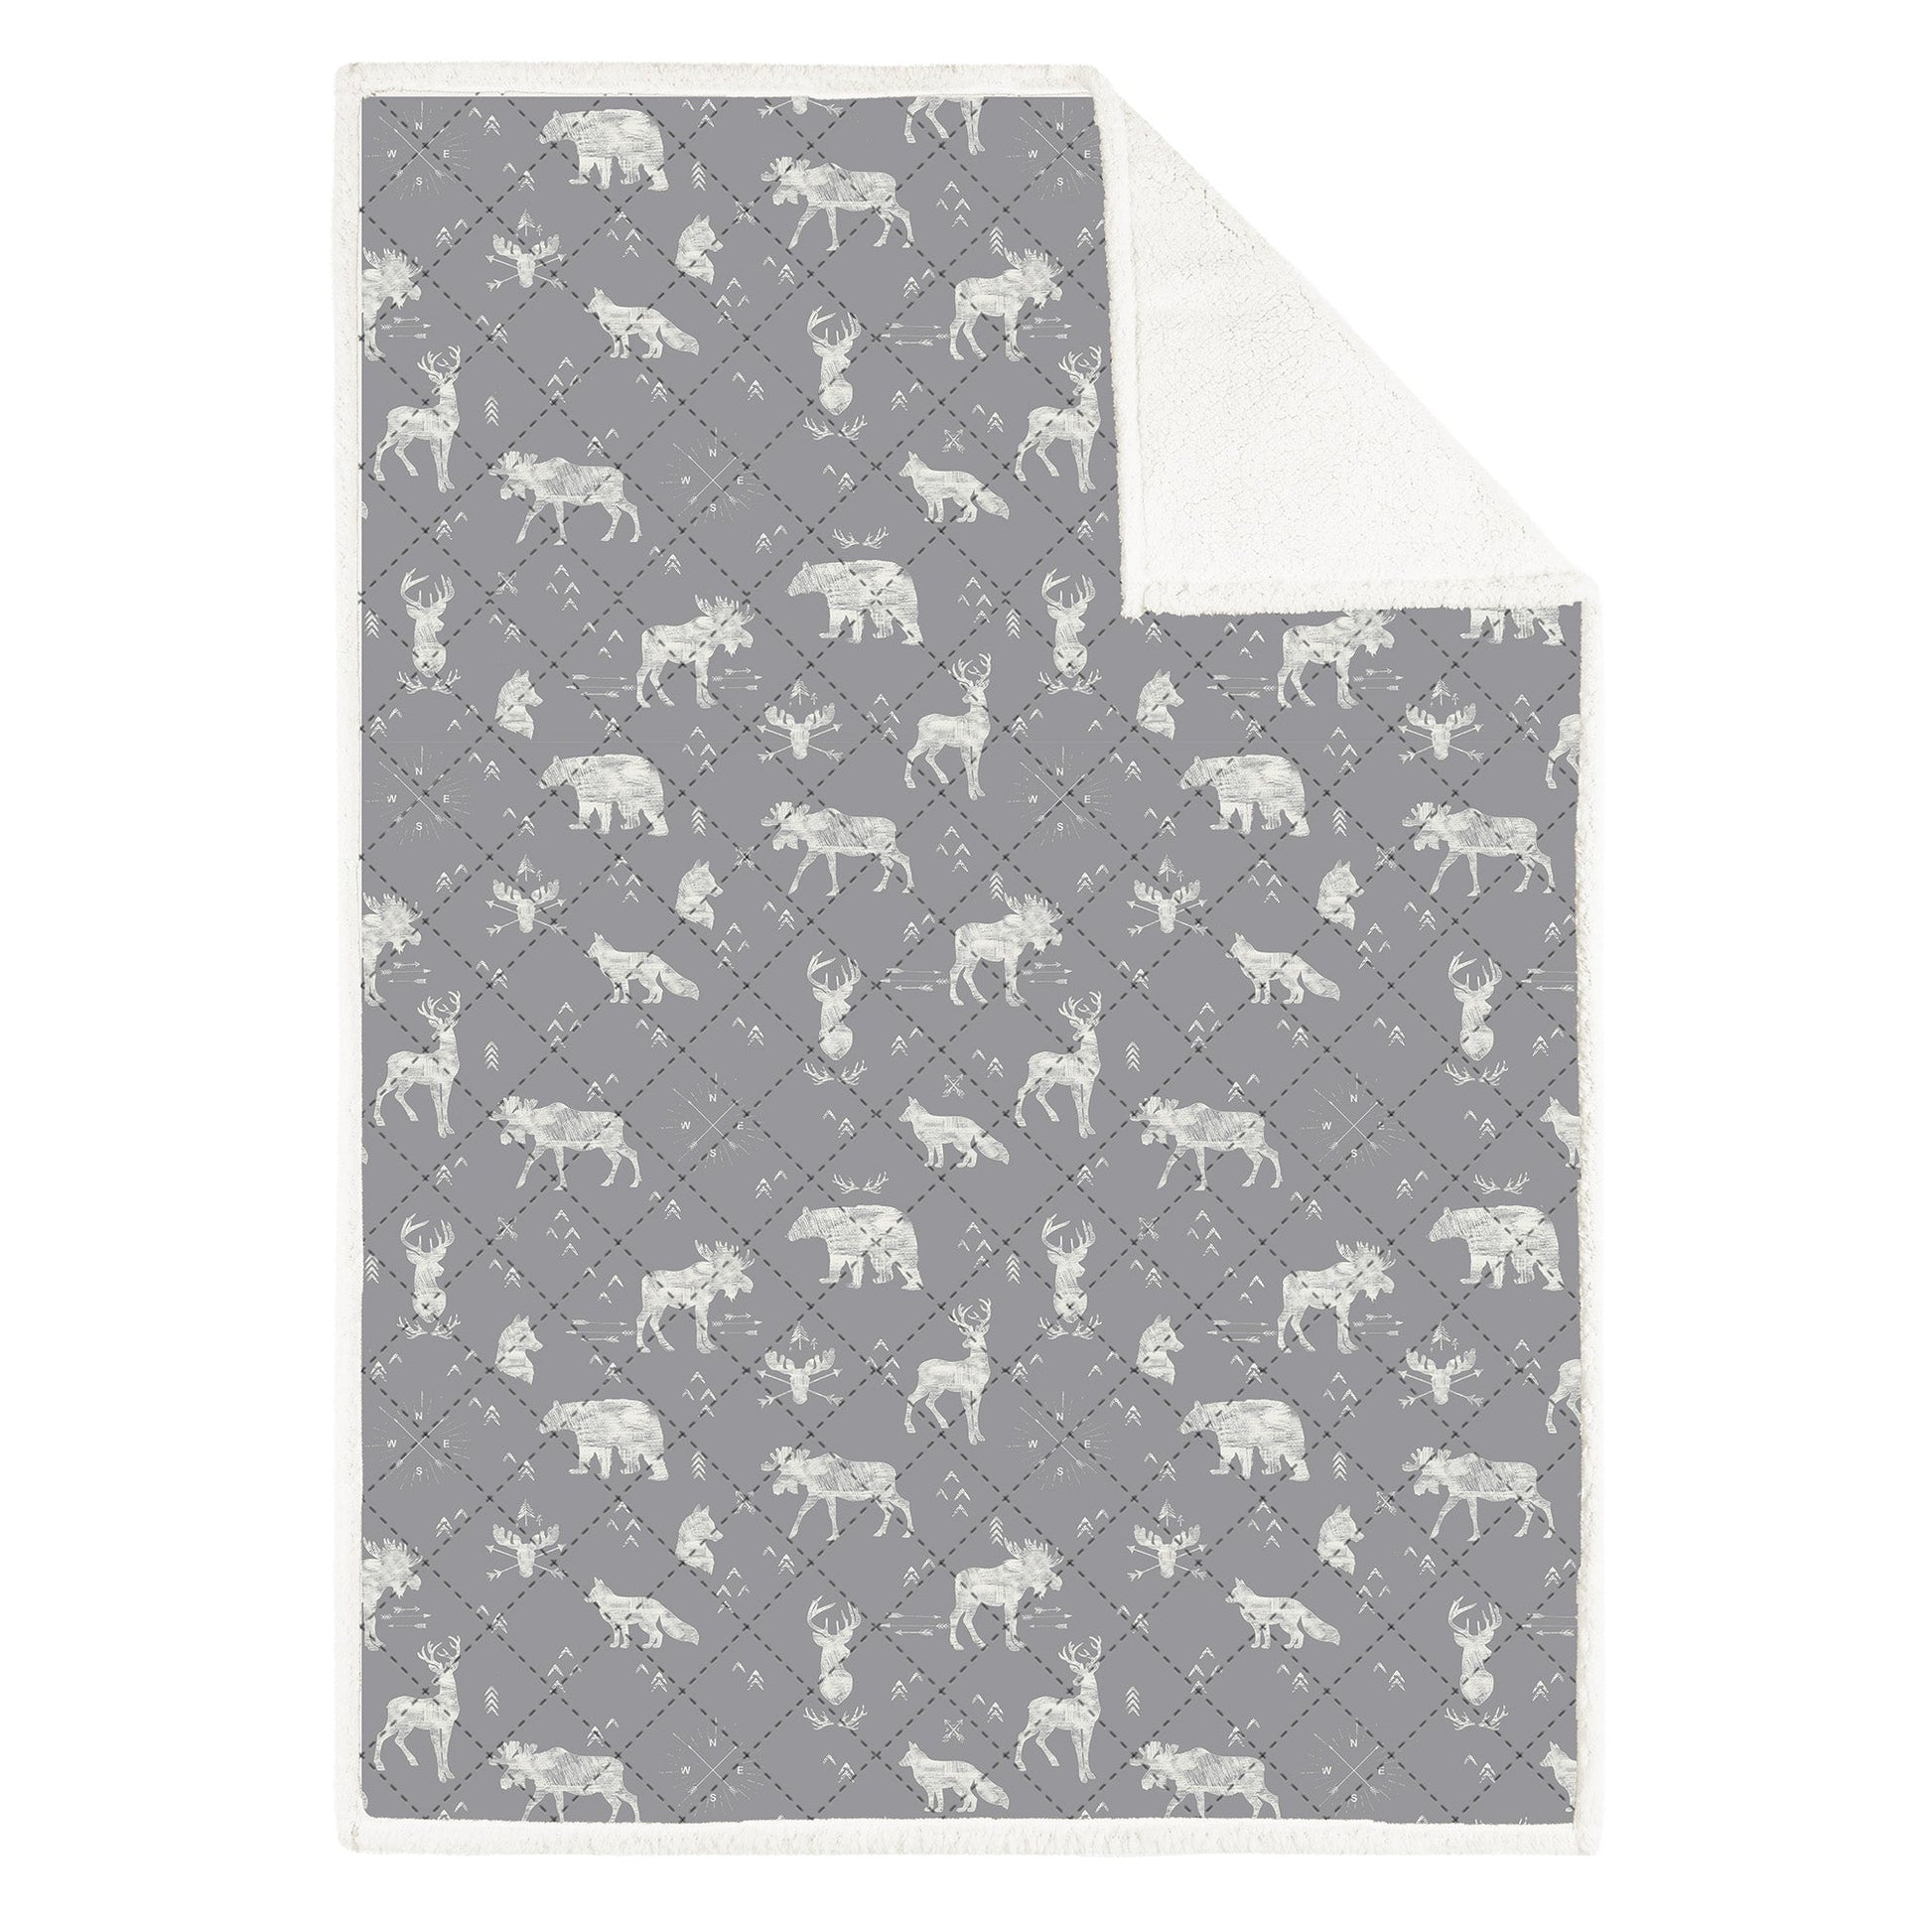 Super Soft Oversized Quilted Blanket Throw Home Decor Bedding 50X70 Grey Wildlife - DecoElegance - Blanket Throw Home Bedding